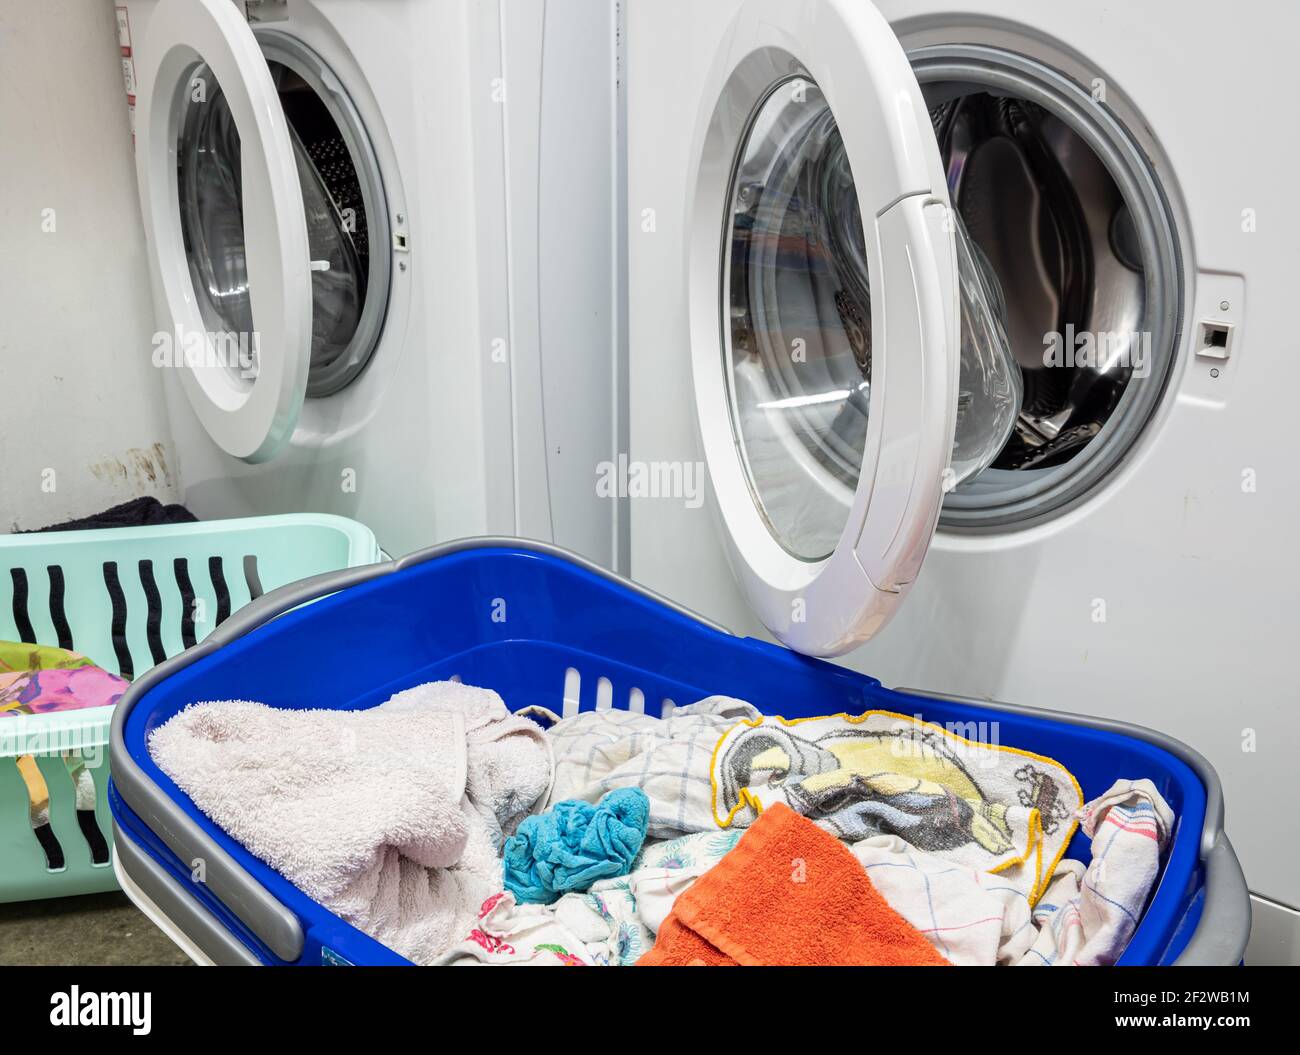 Washing machine and laundry basket at home Stock Photo